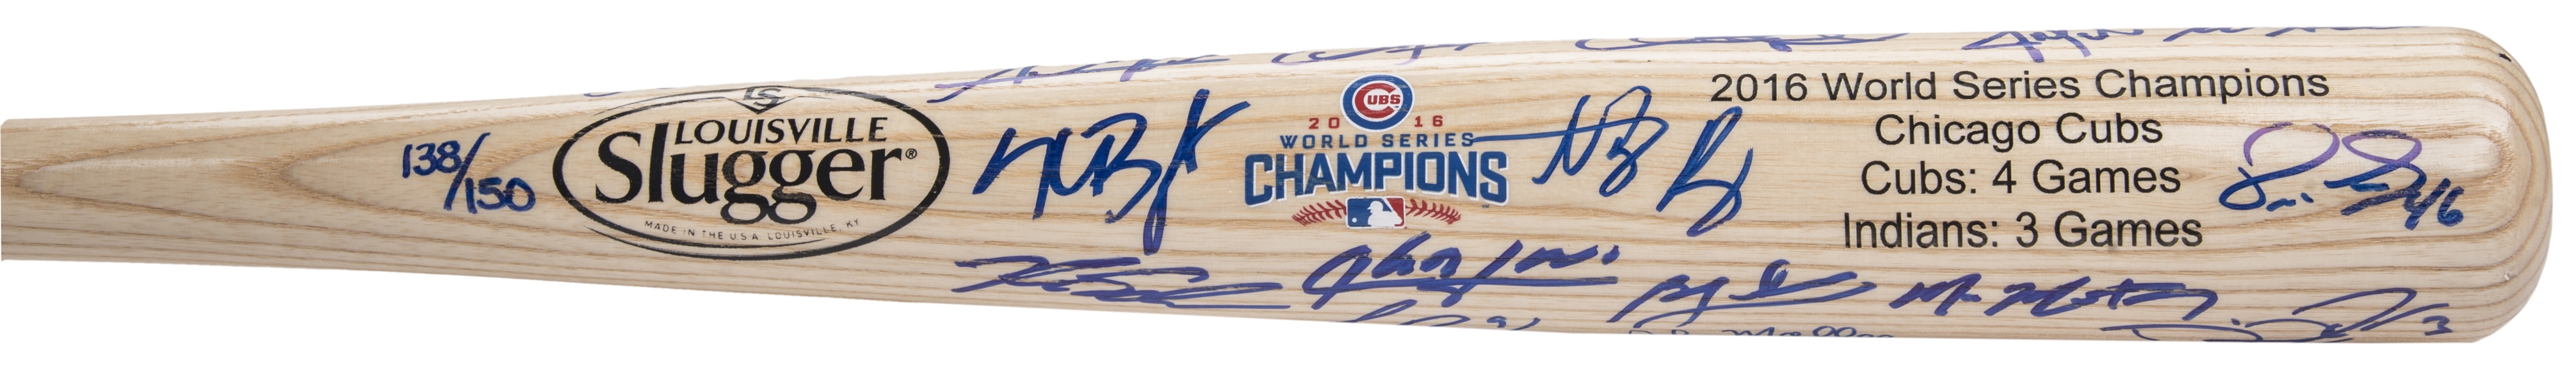 Cubs 2016 World Series Champions Team Signature Bat